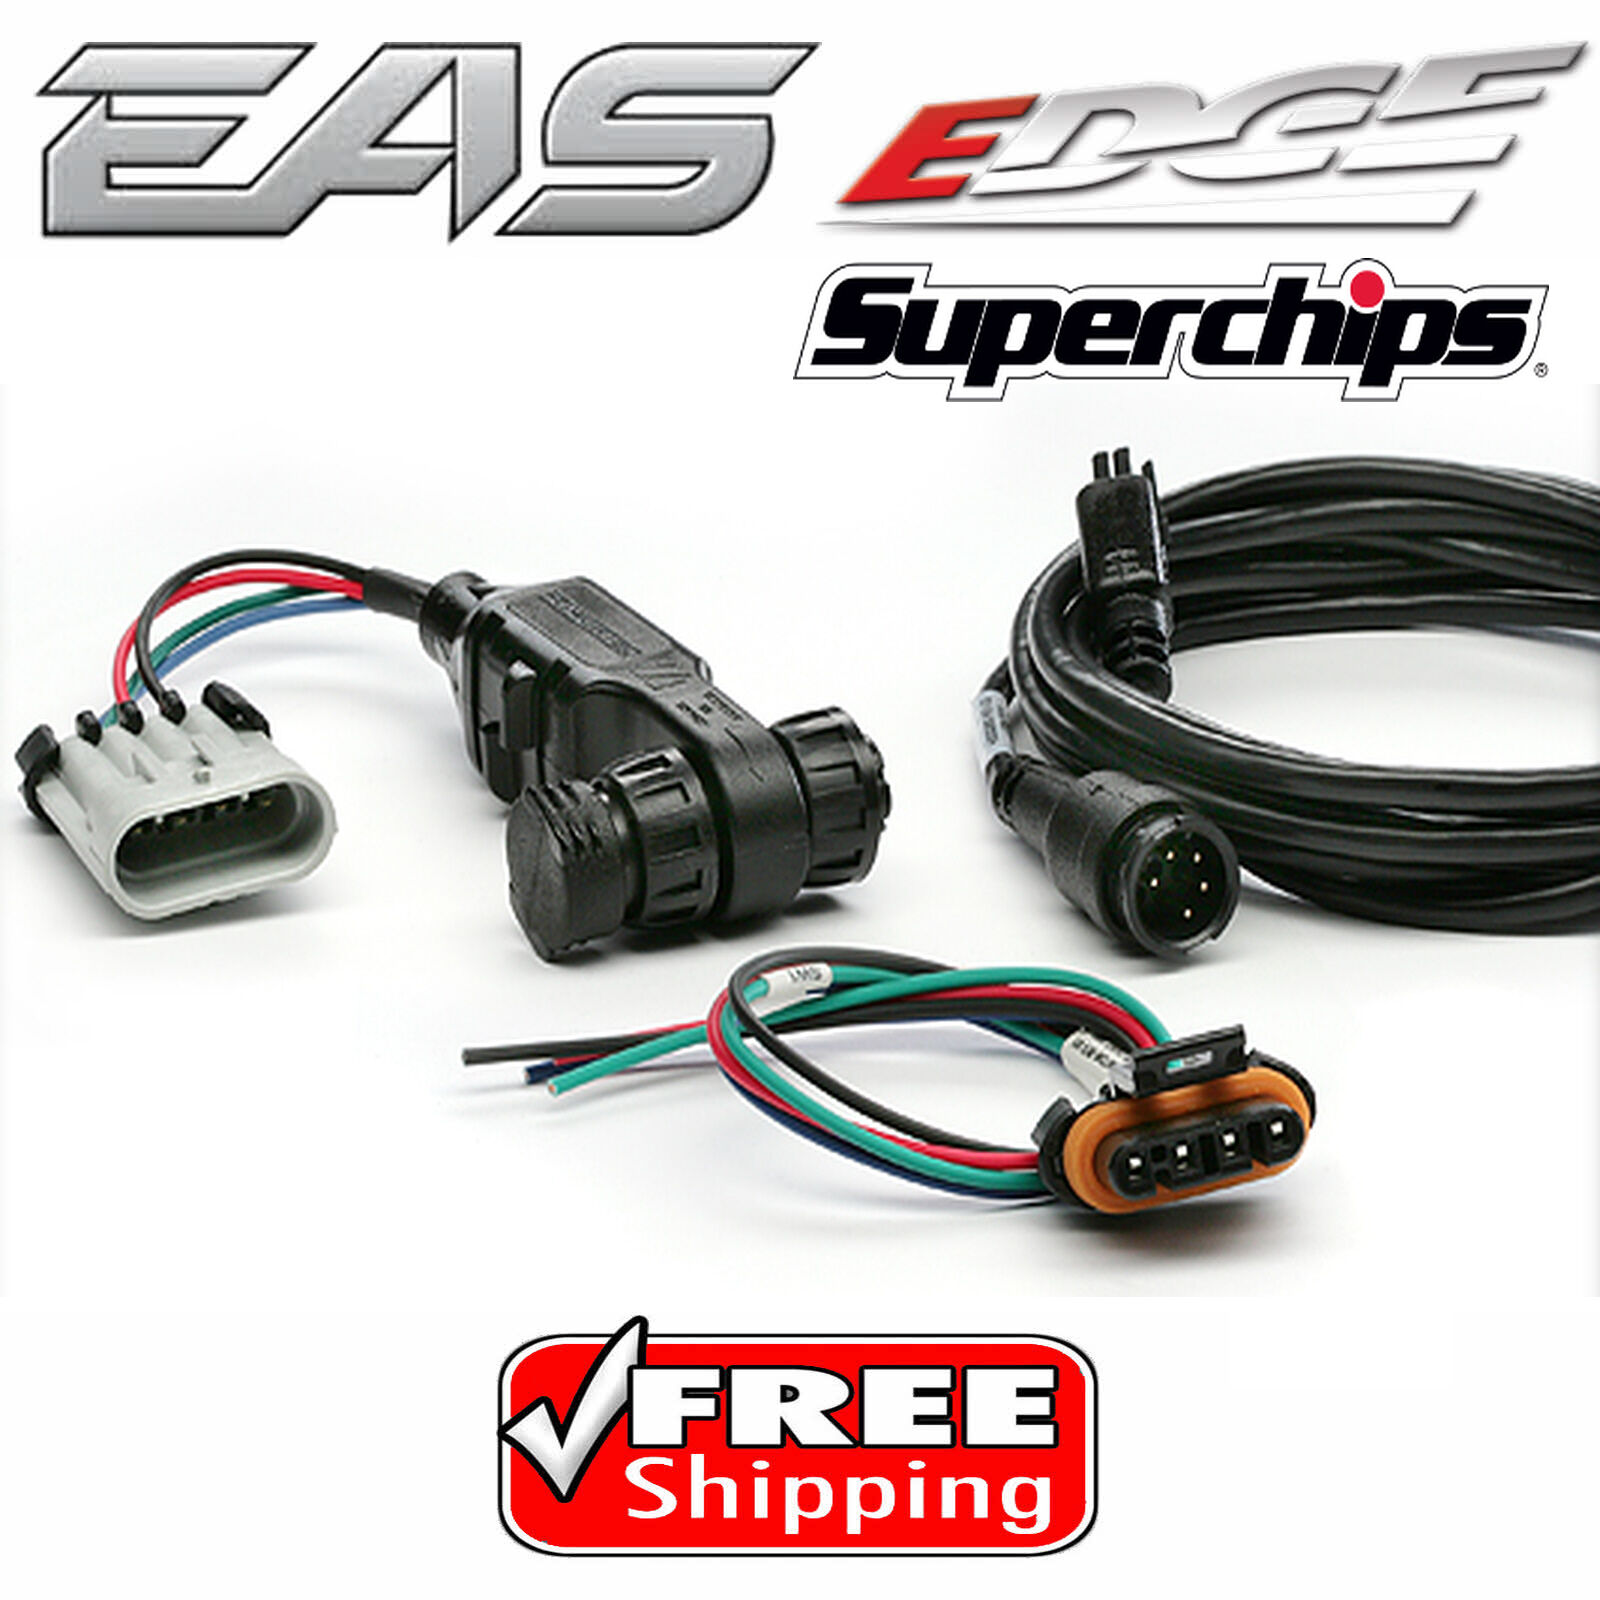 EAS 98609 Power Switch w/ Starter Kit Superchips TD2 Edge CS2 CTS2 Tuner Monitor